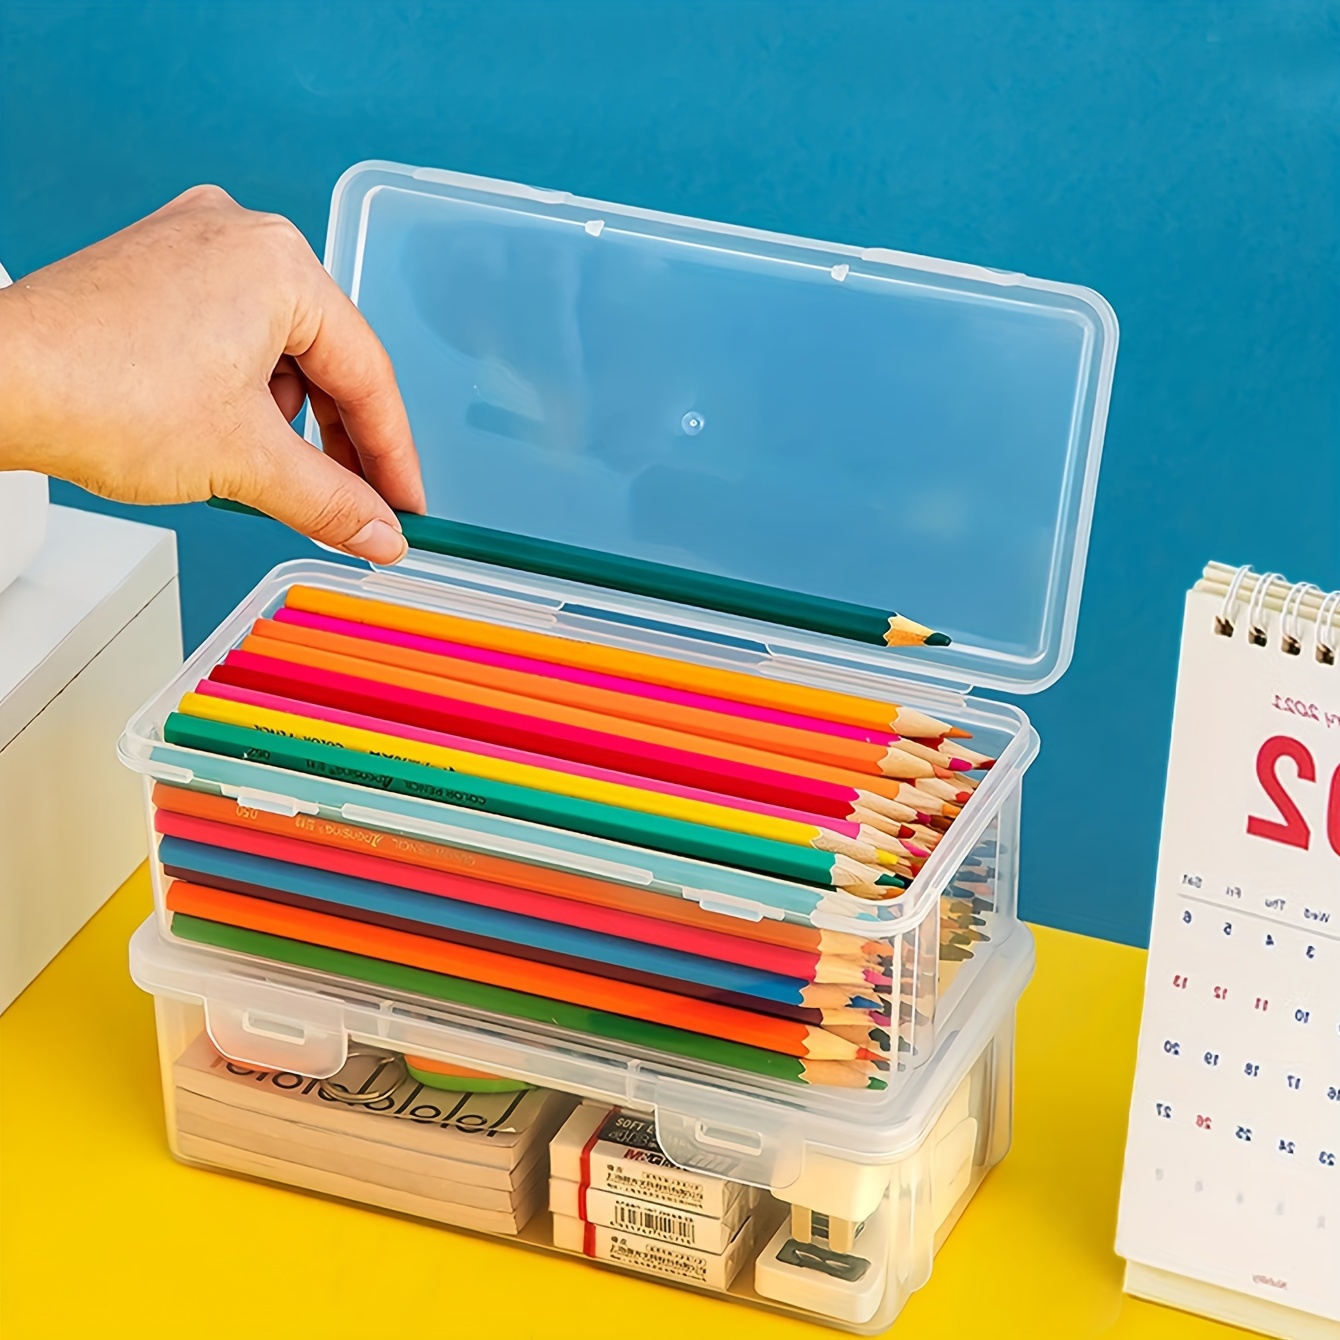 

1pc Translucent Pencil Case: Big Capacity & Frosted Design - Perfect For School Supplies, Pencil Case, Practical Convenient Storage Box